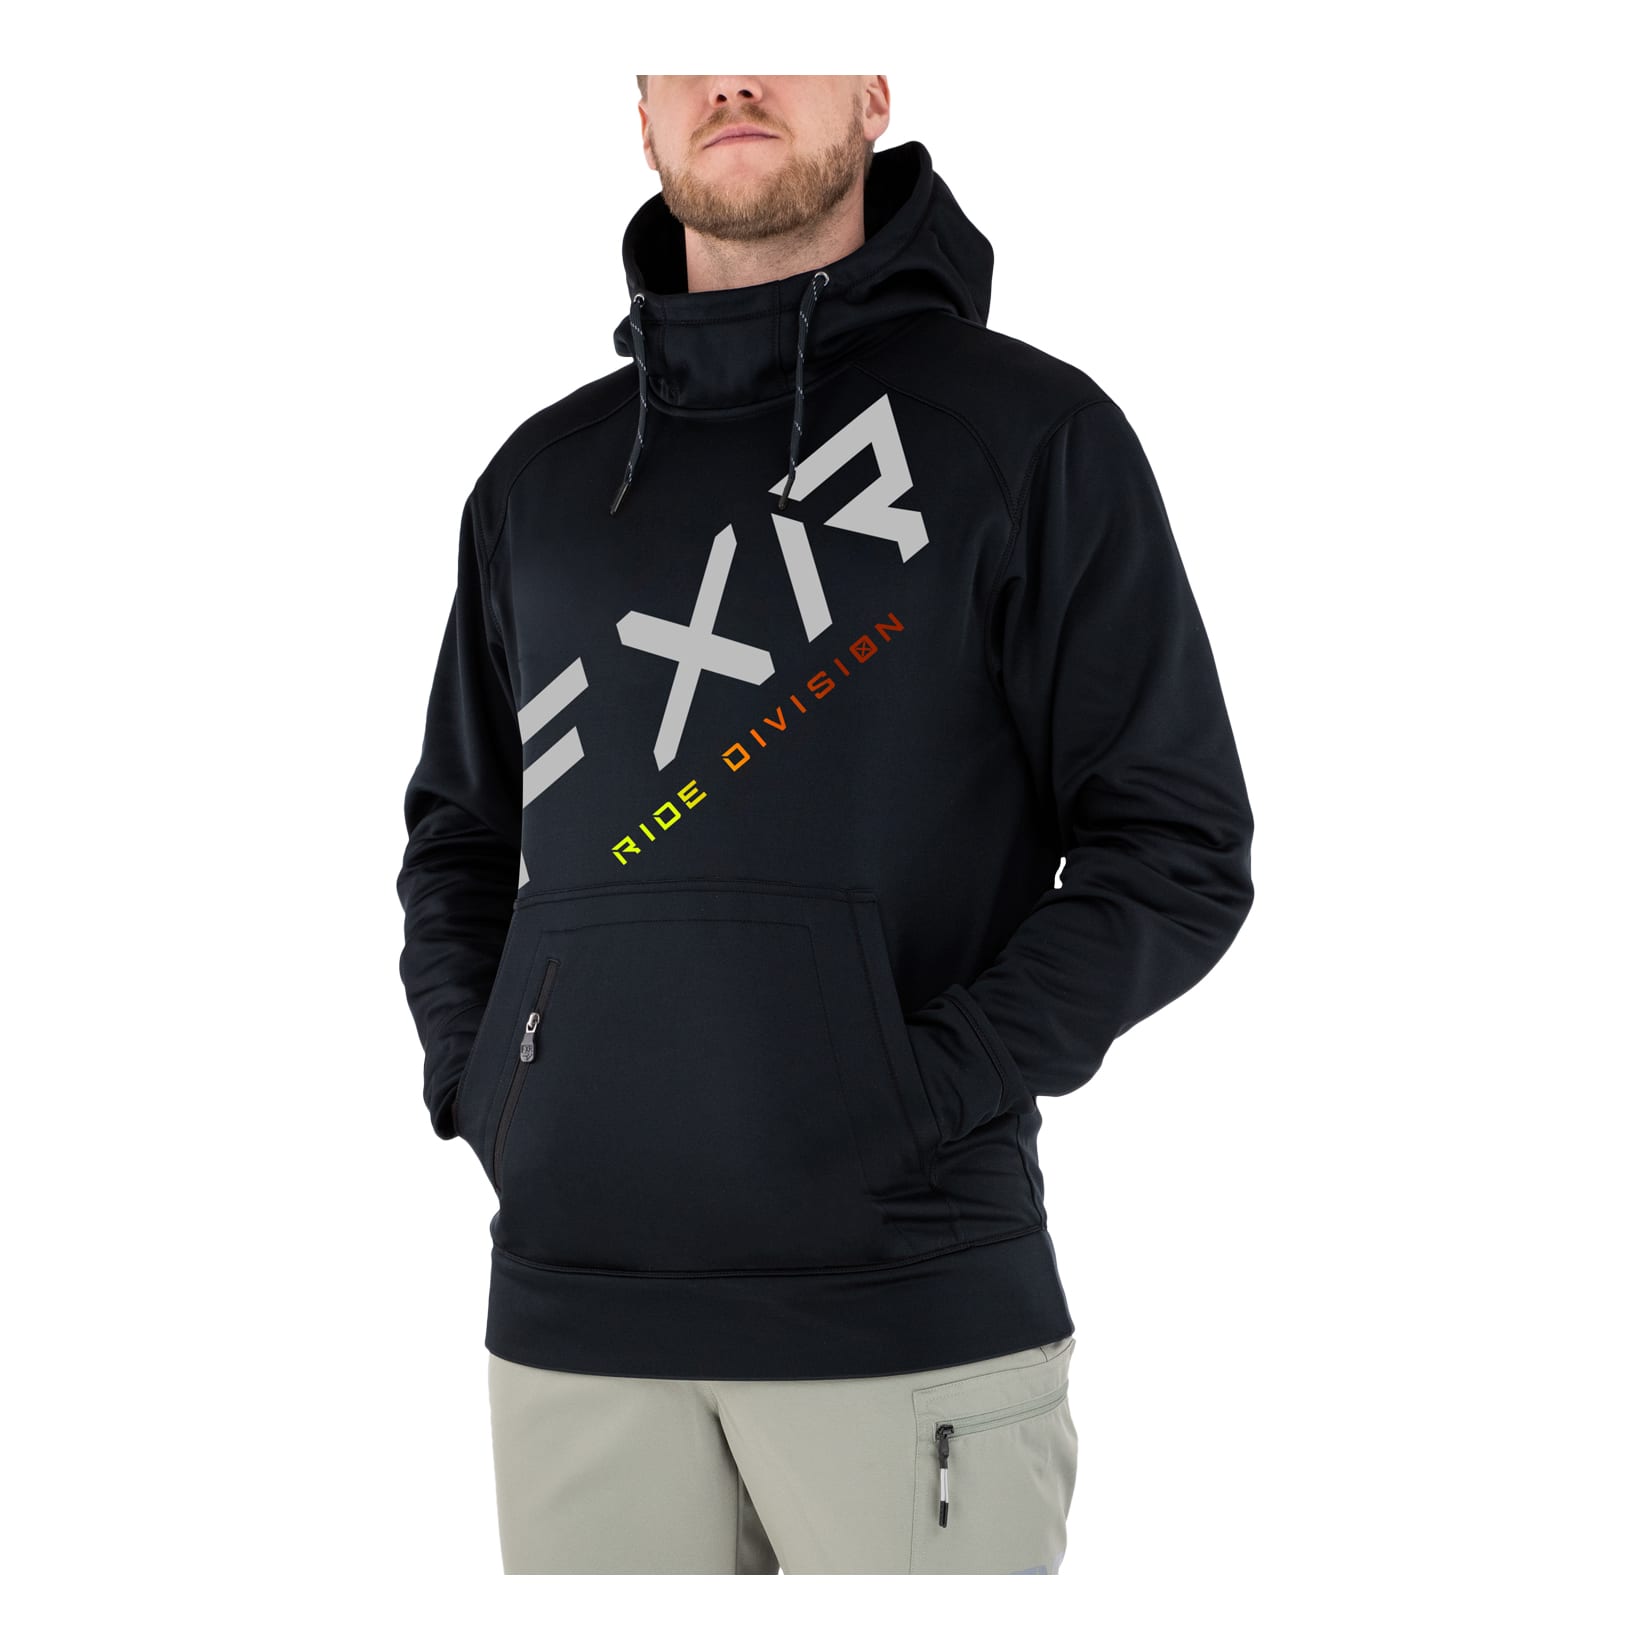 FXR® Men’s CX Tech Pullover Hoodie - Black/Grey